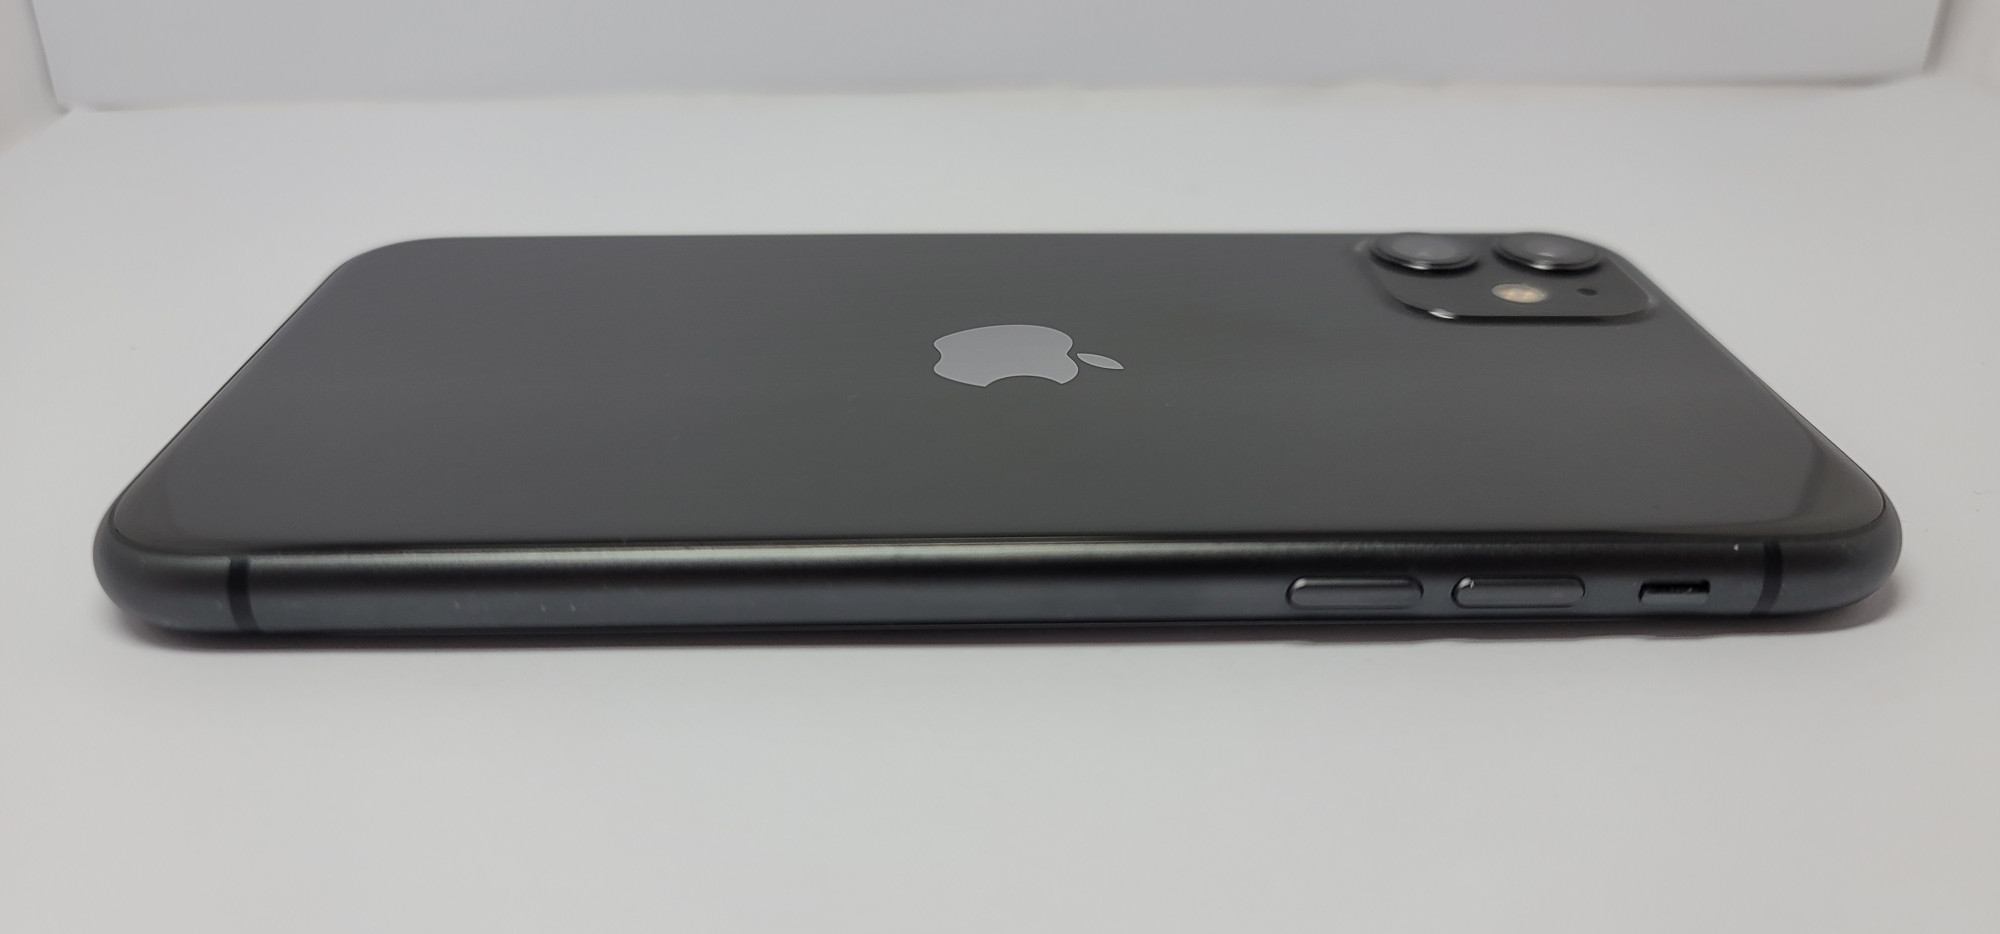 Apple iPhone 11 64GB Black (MWLT2) 3